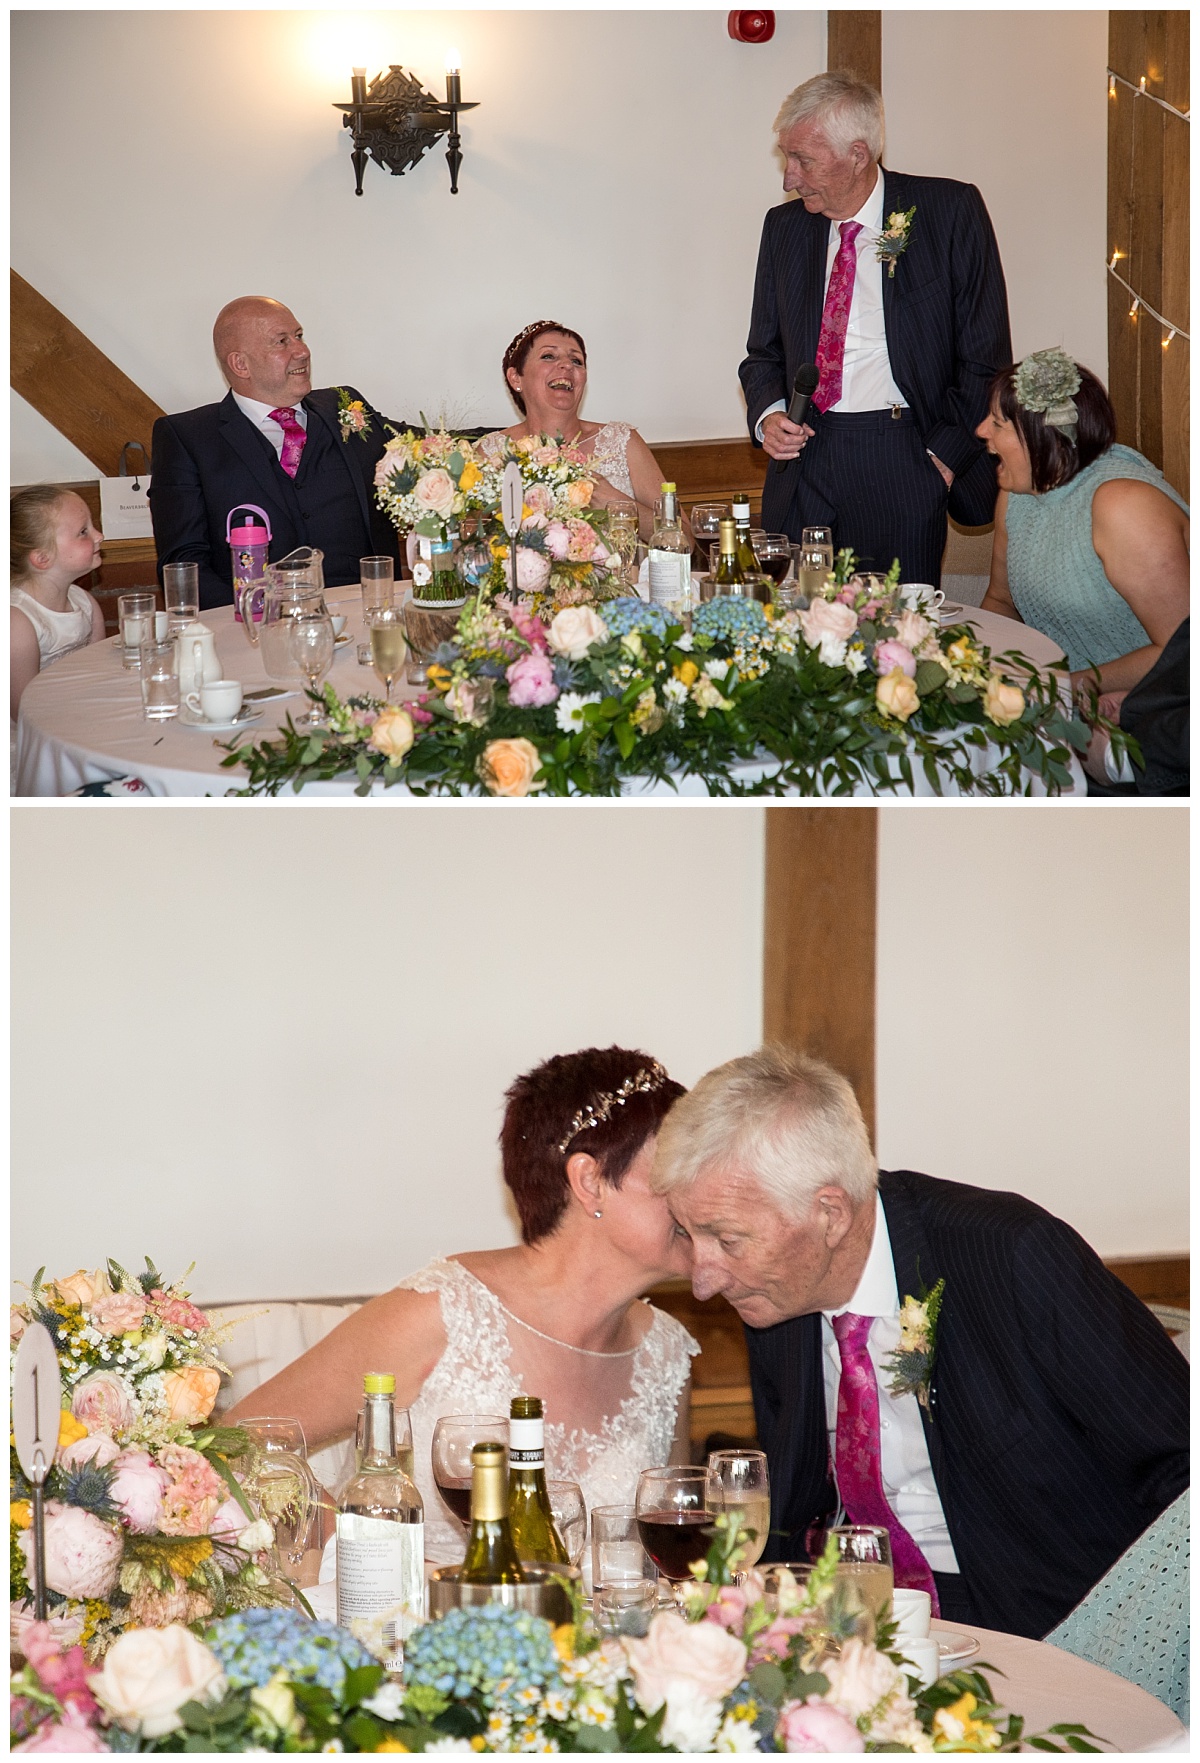 Wedding Photography Manchester - Susie And Rick's Sandhole Oak Barn Farm Wedding 110